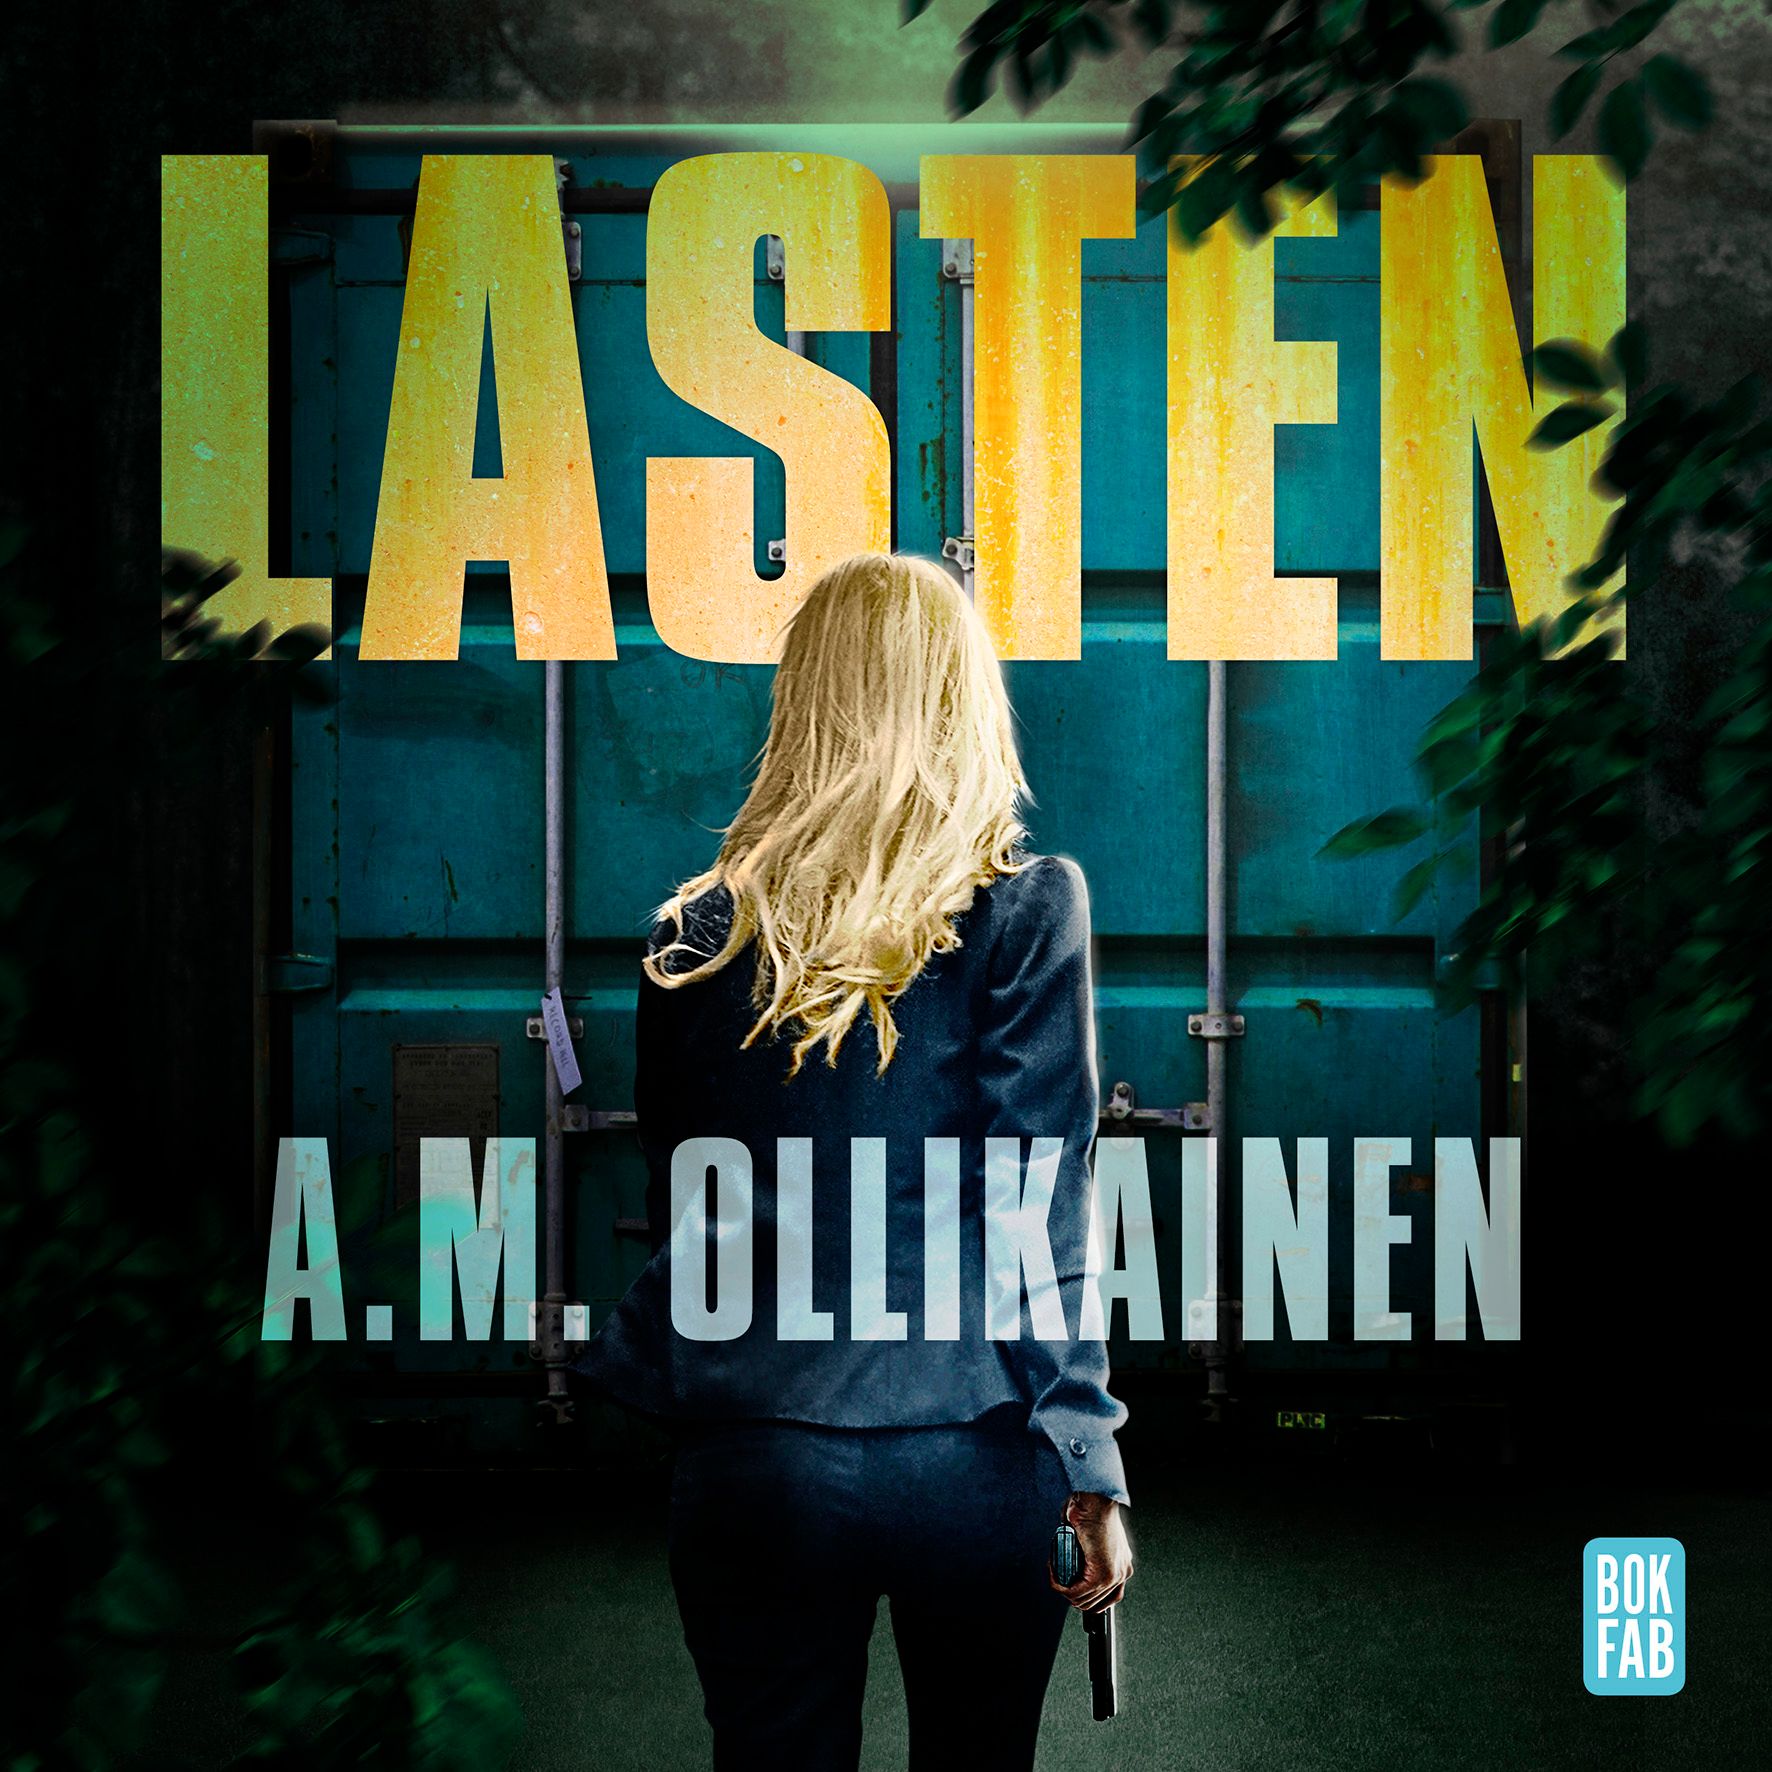 Lasten, ljudbok av A.M. Ollikainen